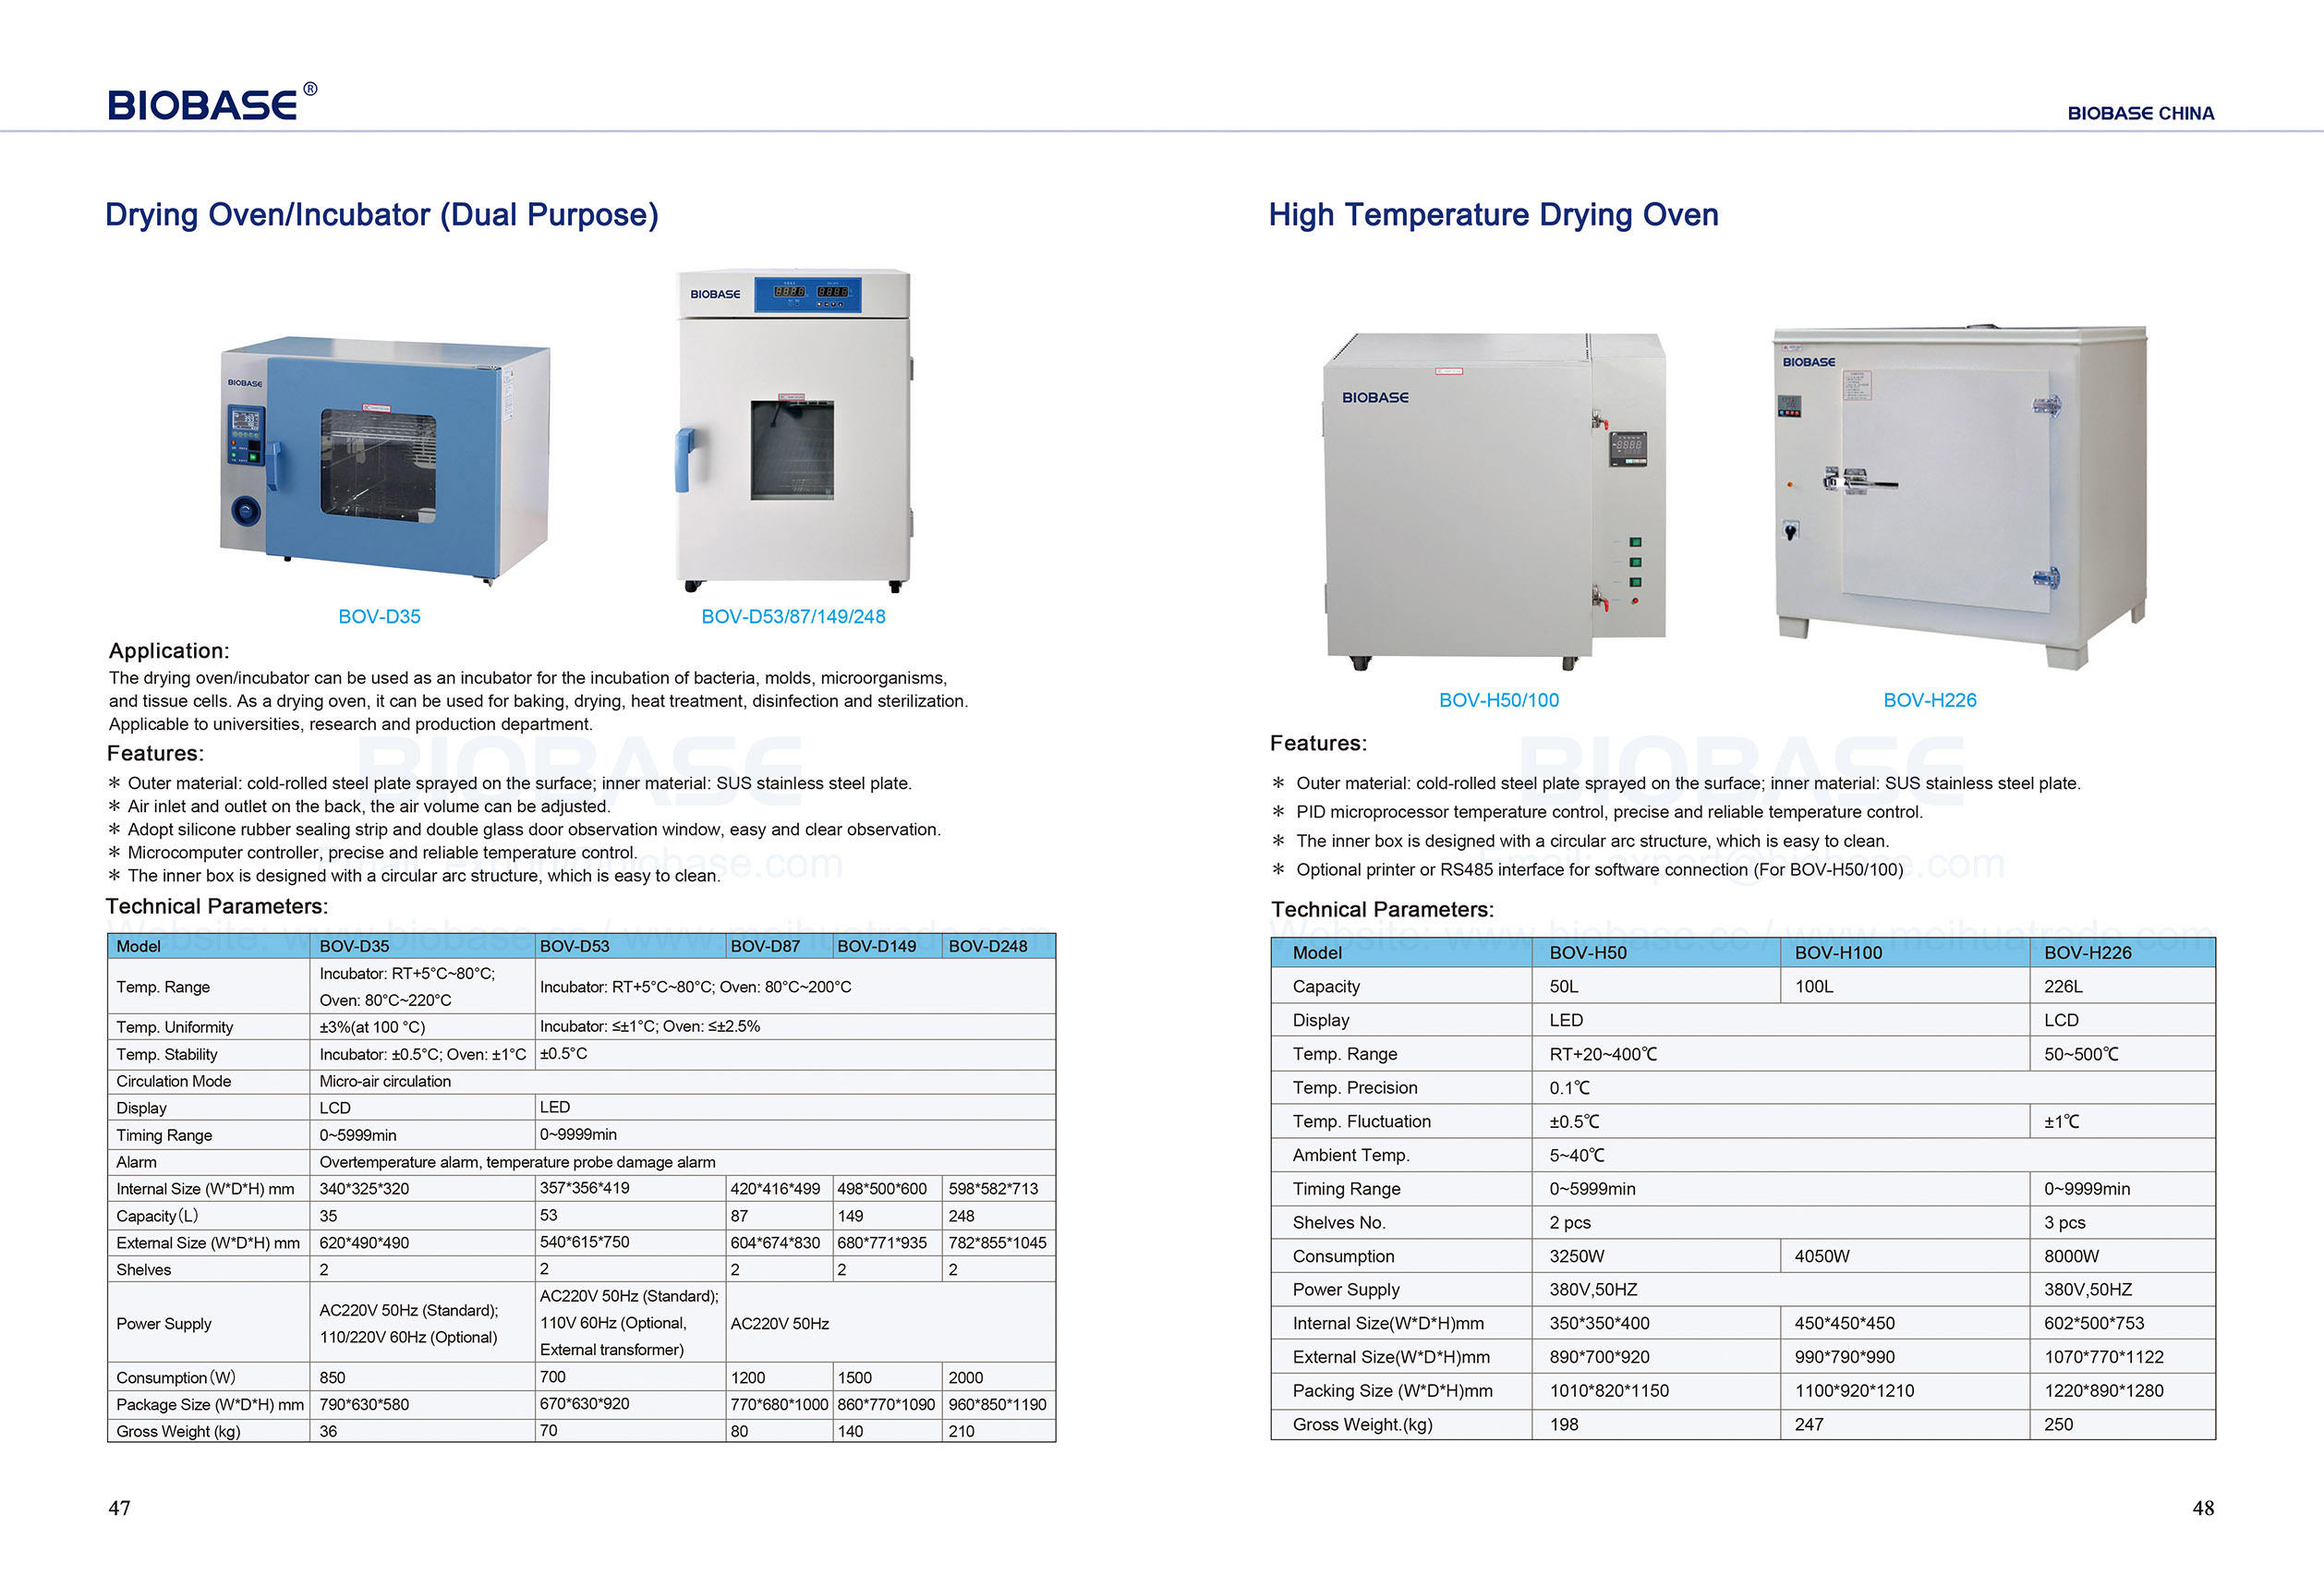 47-48 Drying OvenIncubator (Dual Purpose) & High Temperature Drying Oven